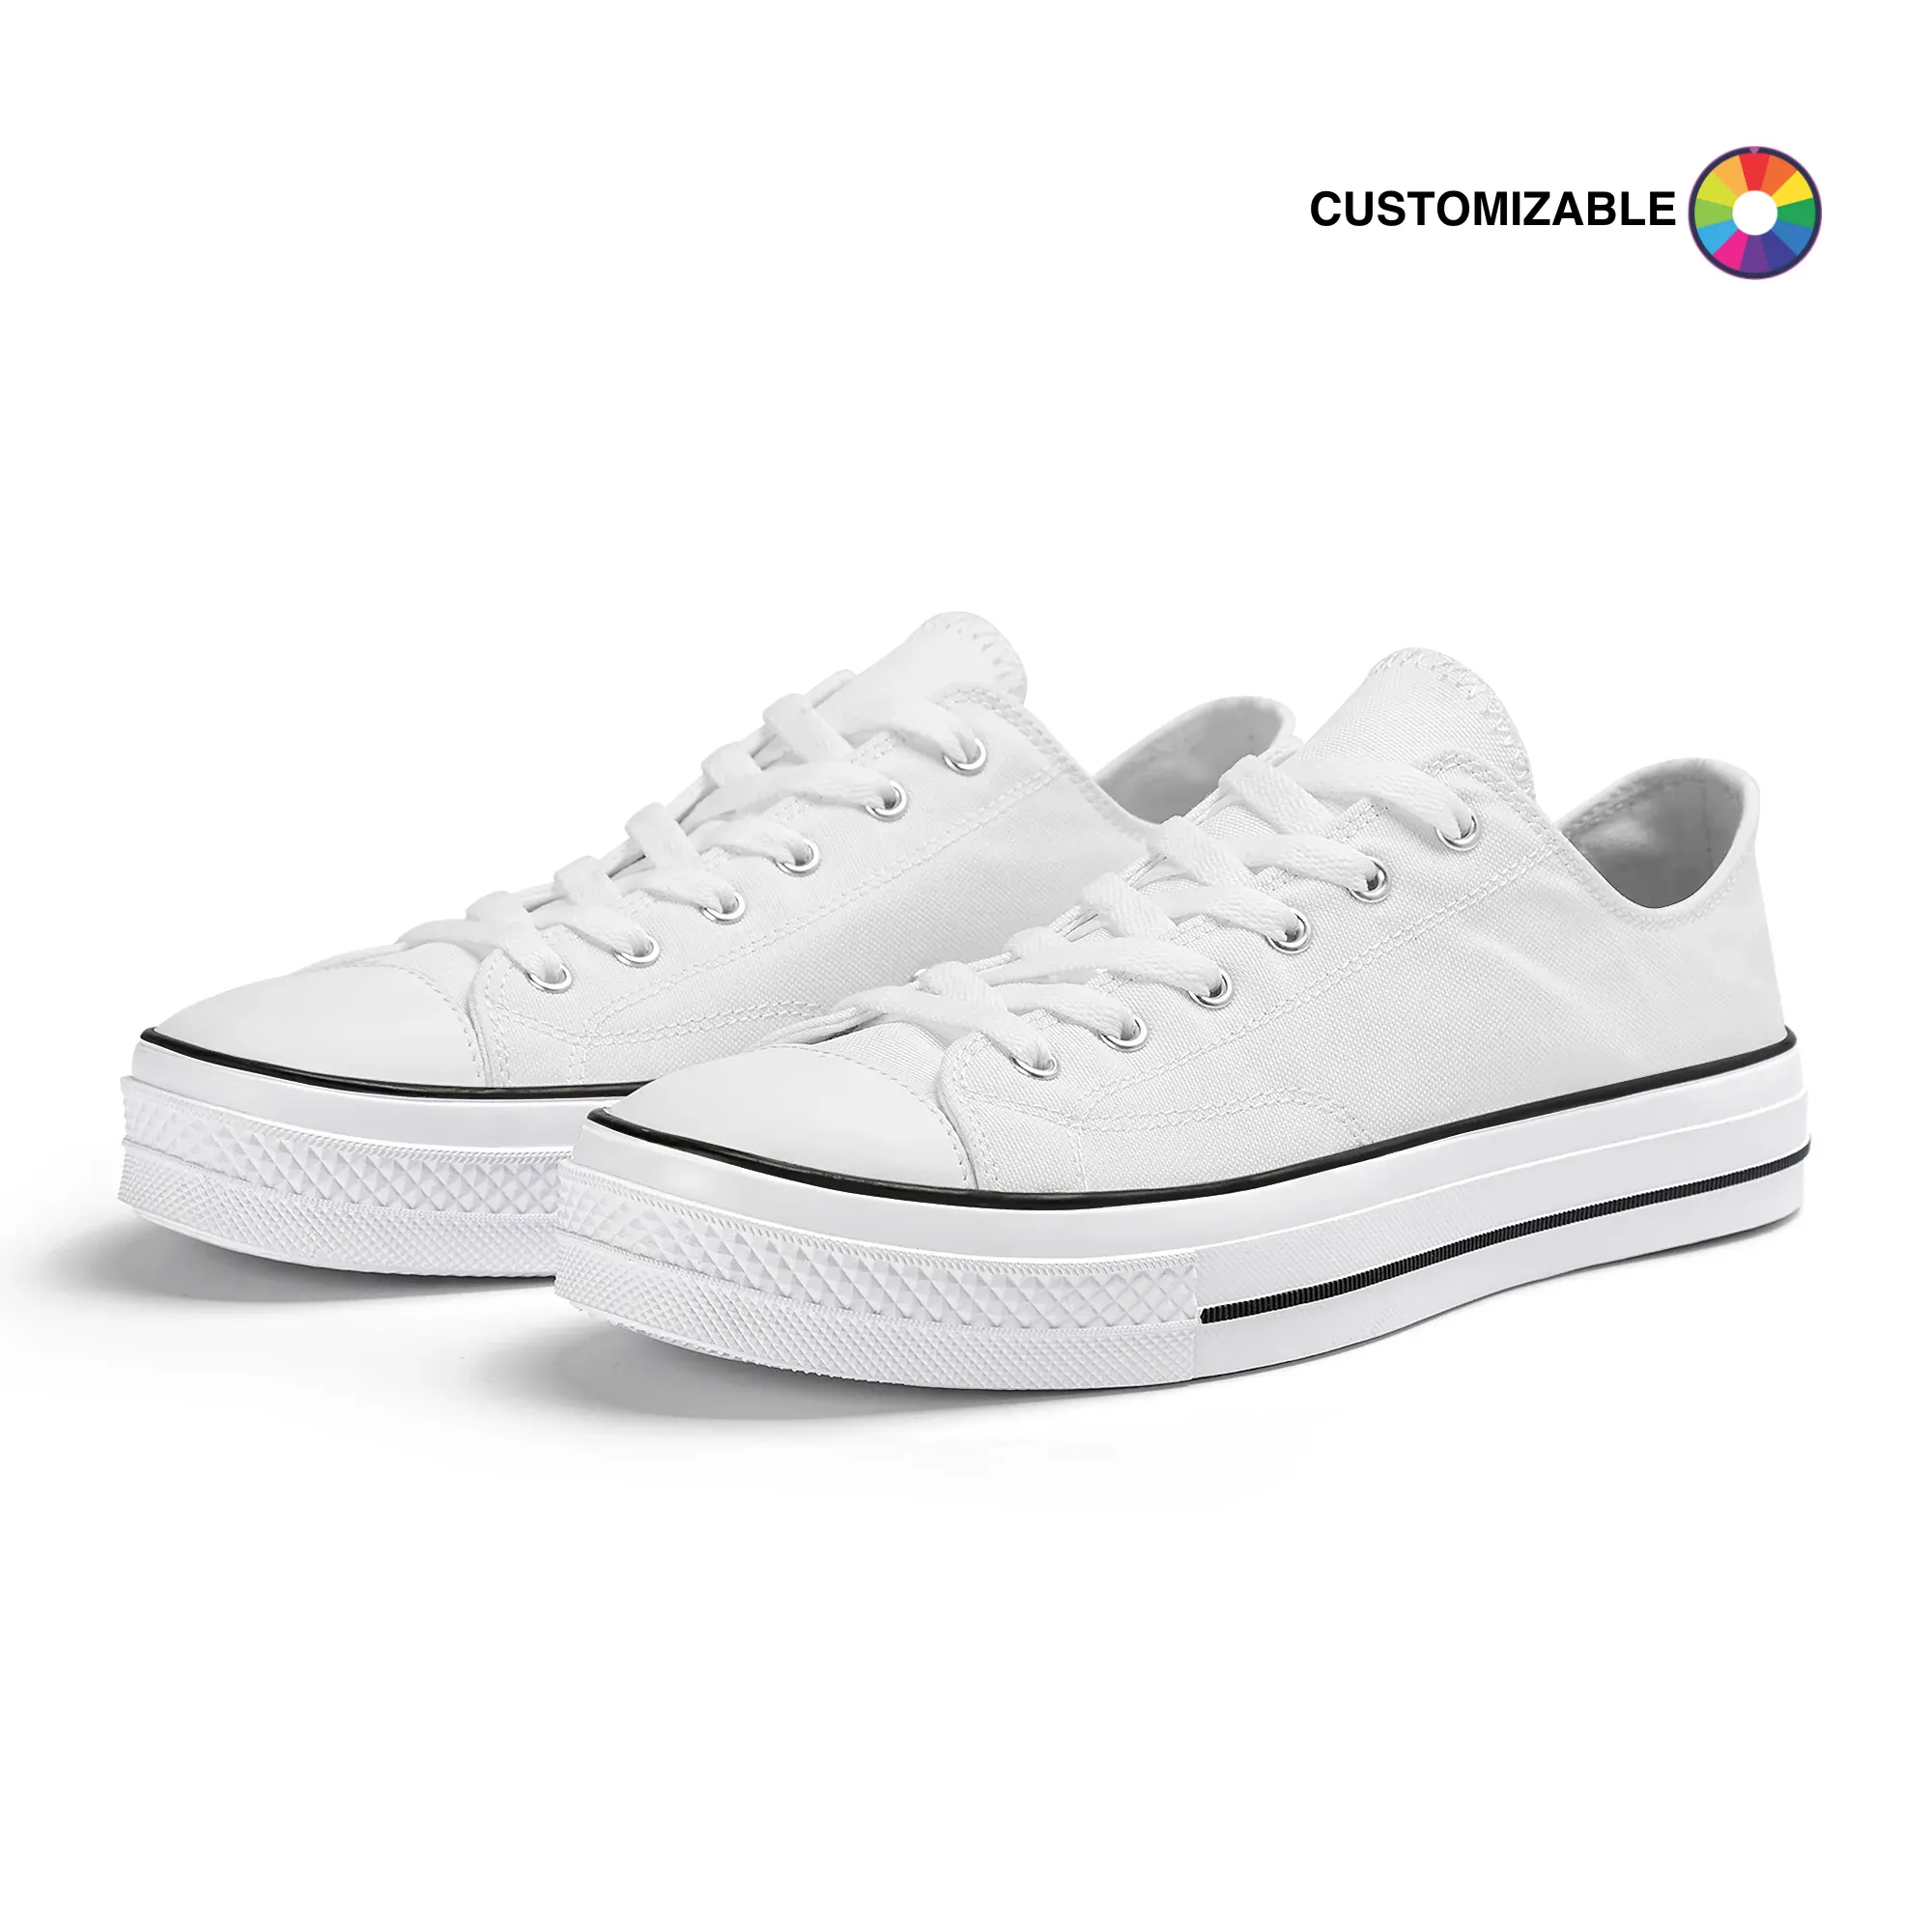 Customizable White Low Top Shoe